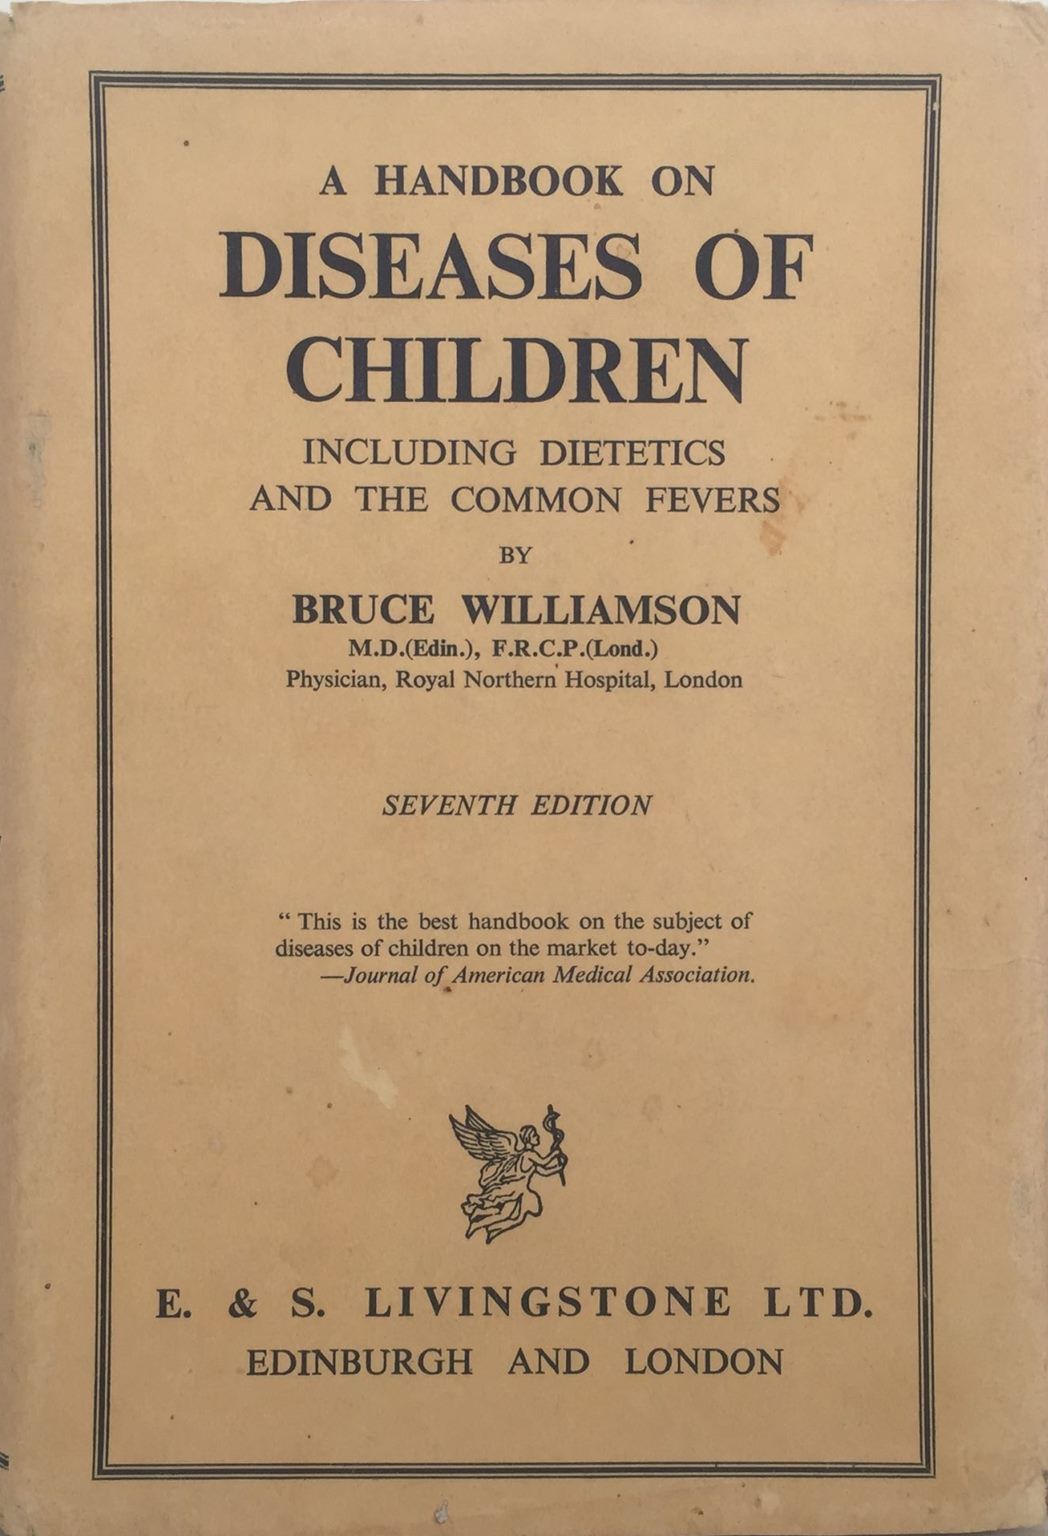 A HANDBOOK ON DISEASES OF CHILDREN